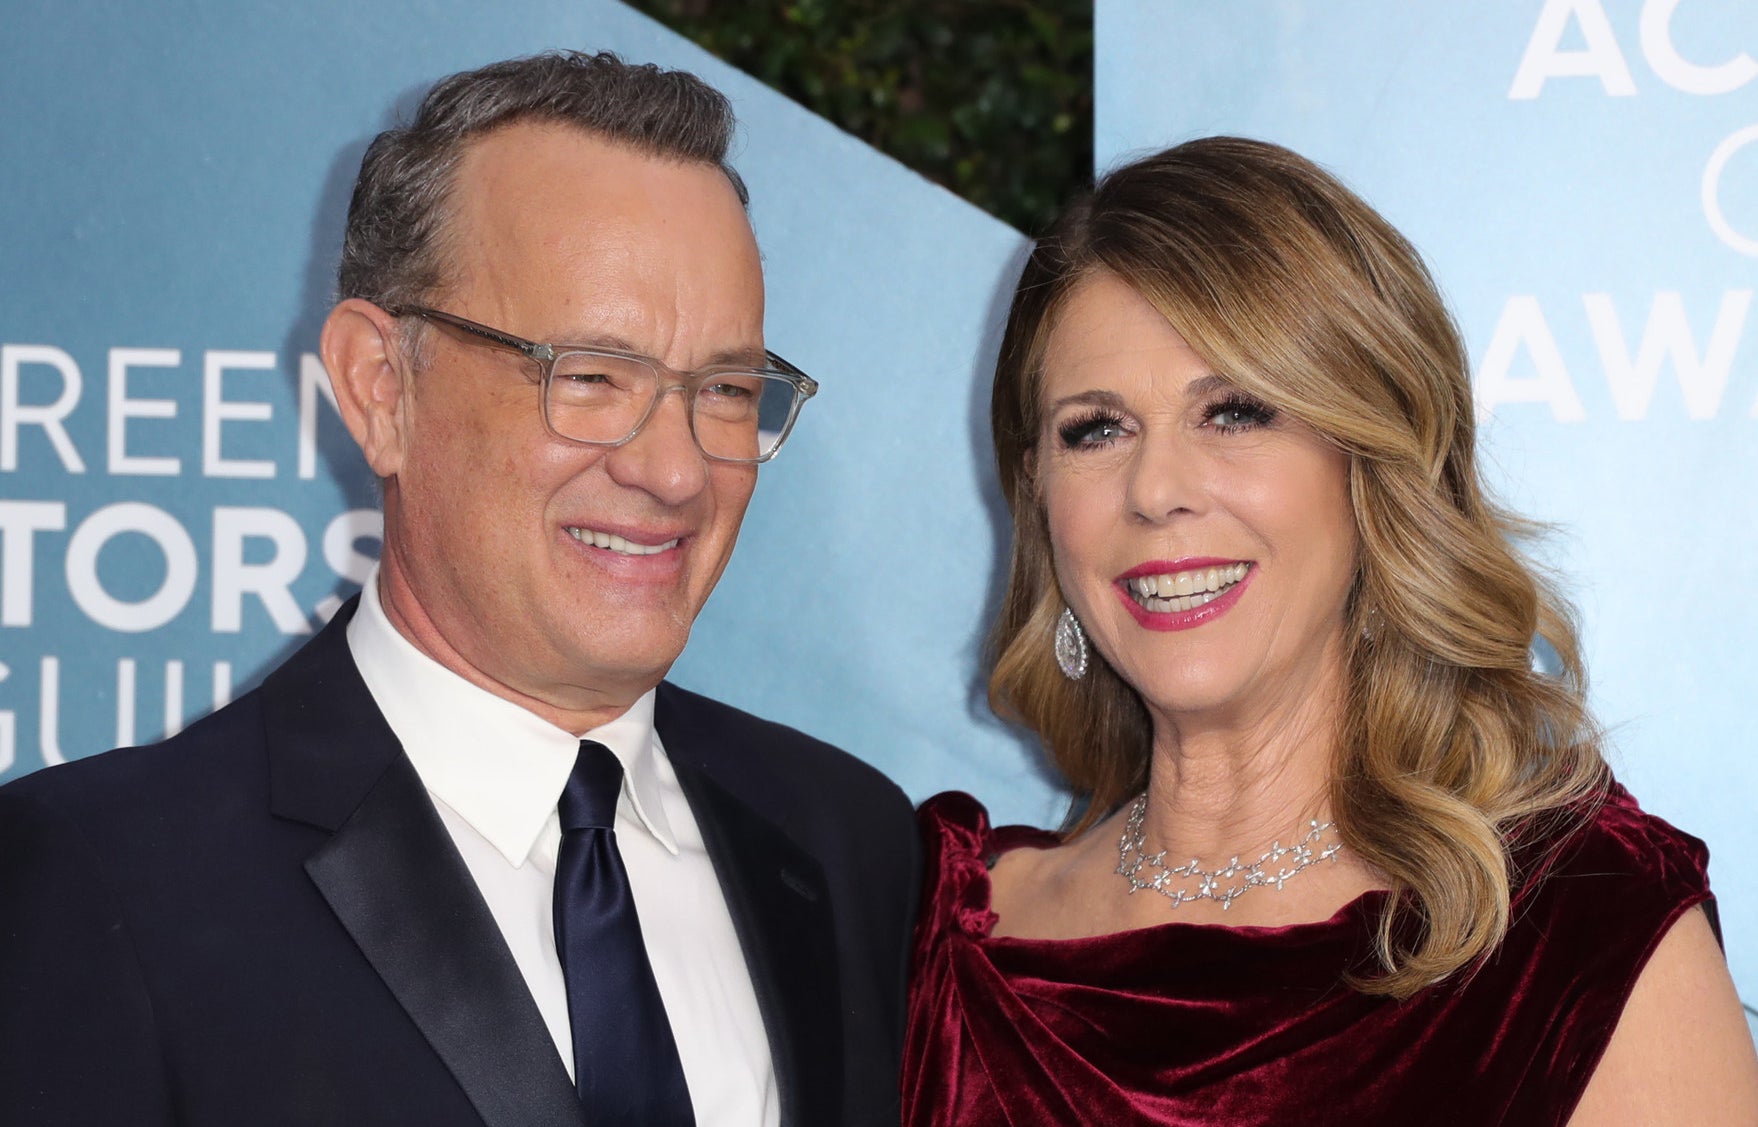 Tom Hanks and Rita Wilson smiling together